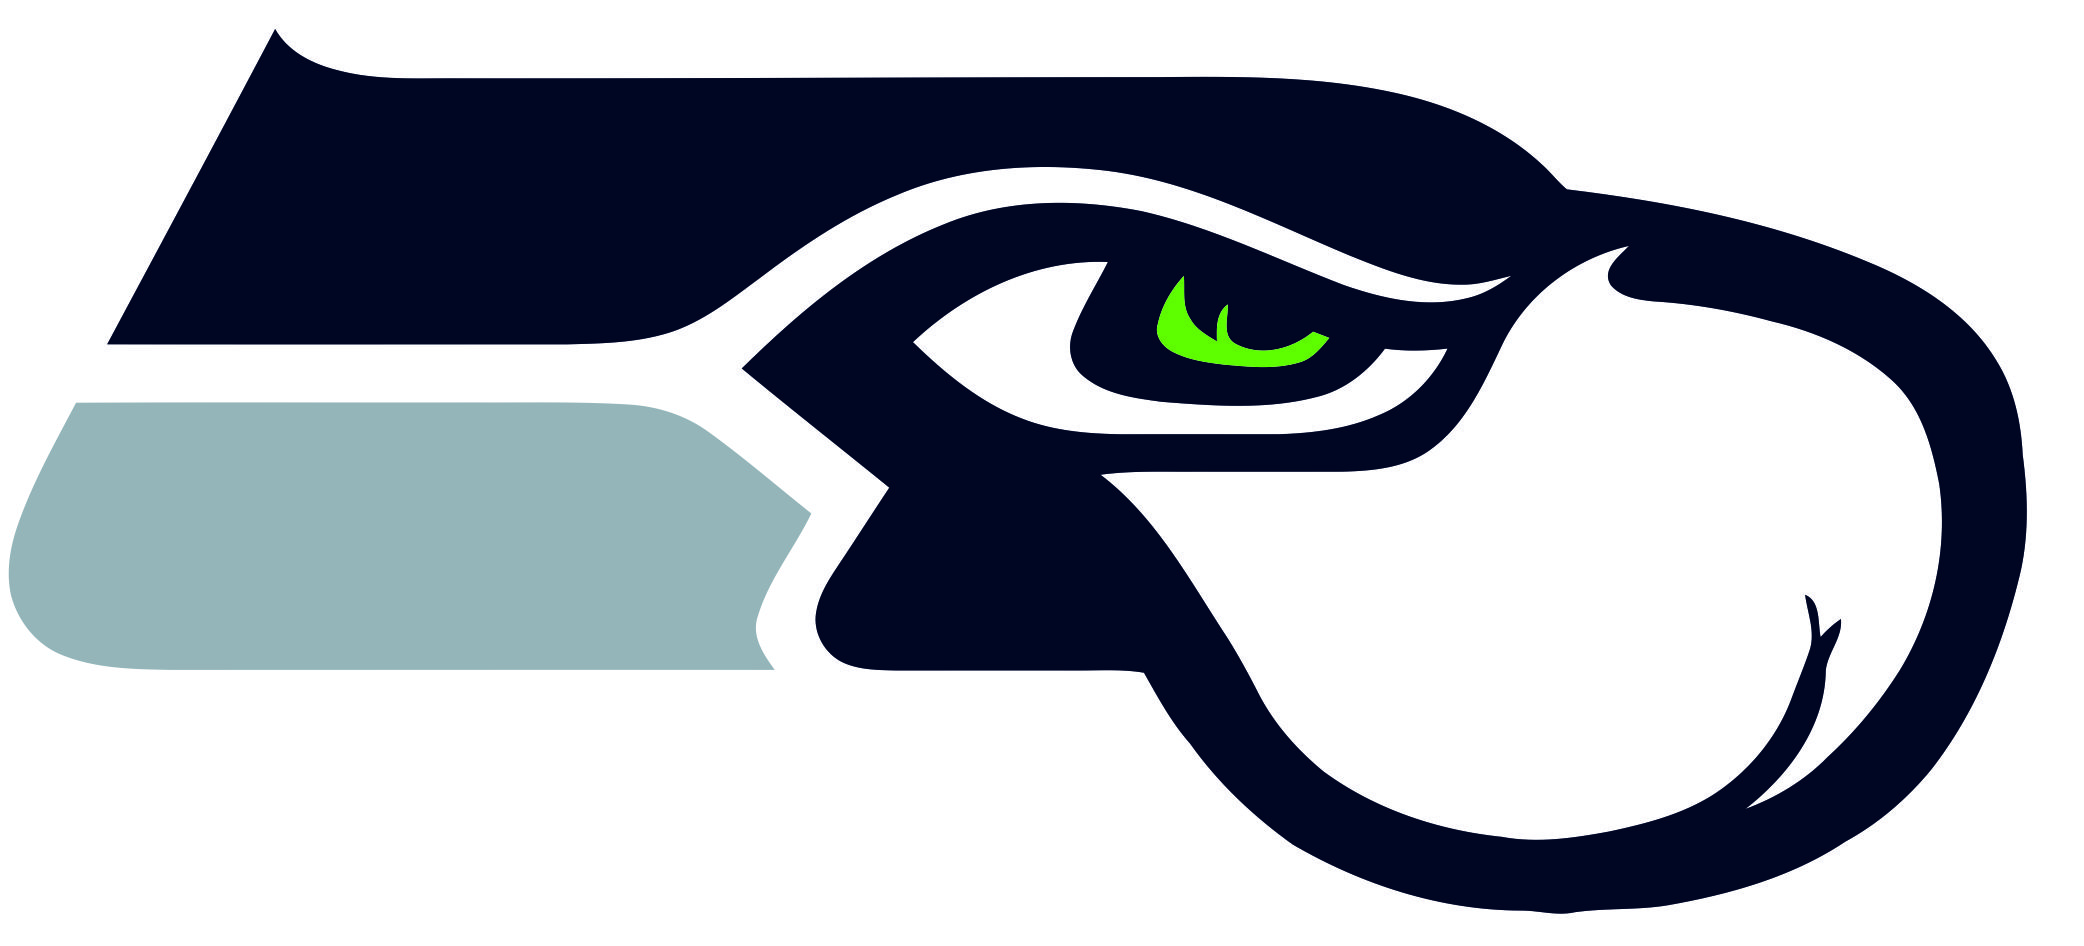 Seattle Seahawks Butts Logo fabric transfer